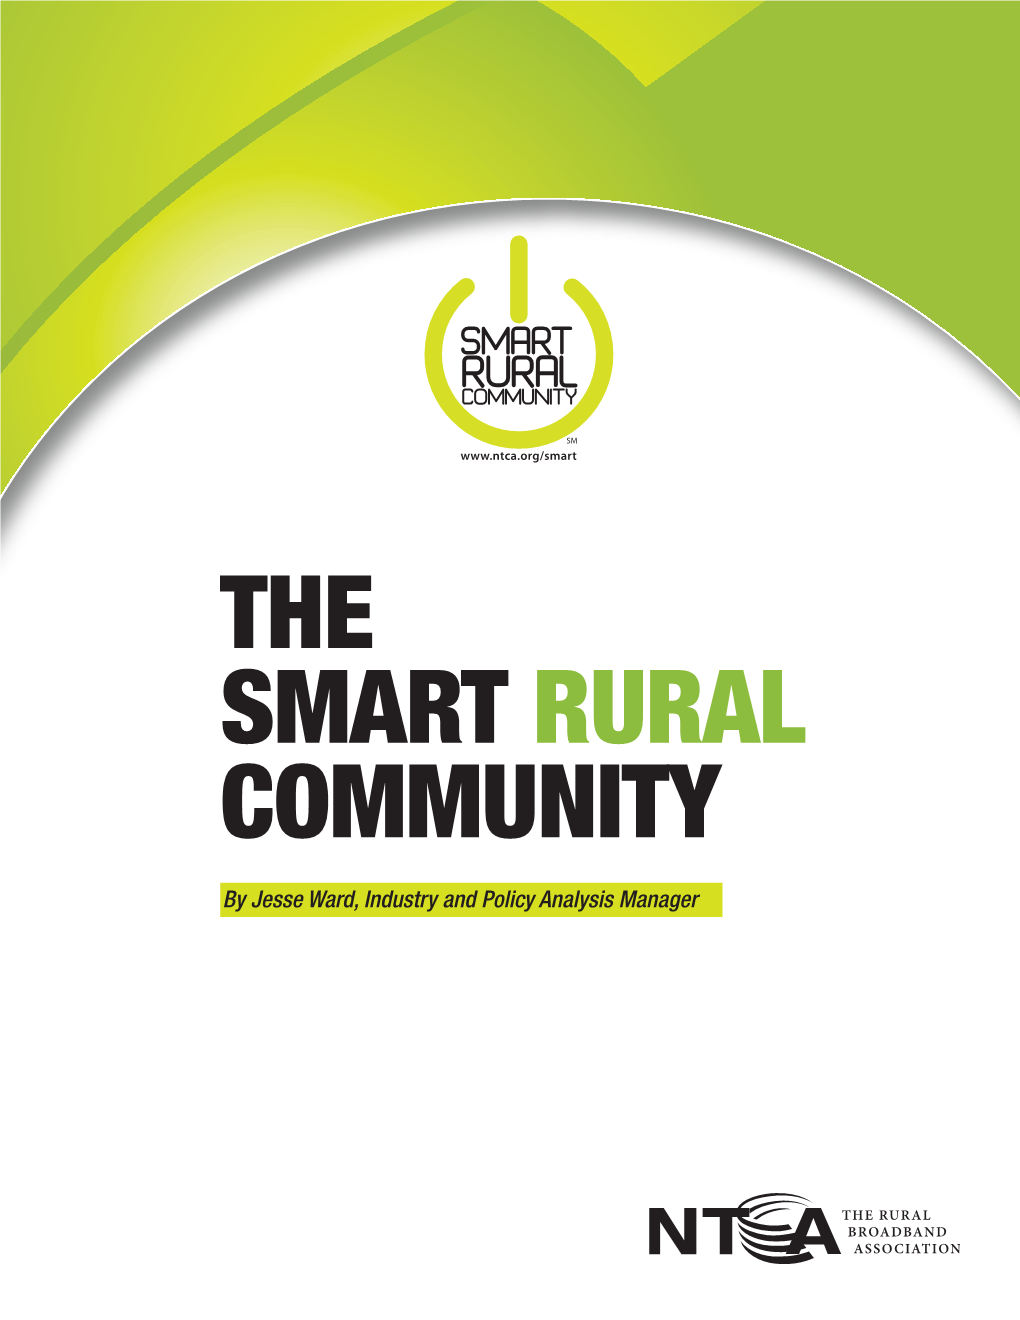 The Smart Rural Community